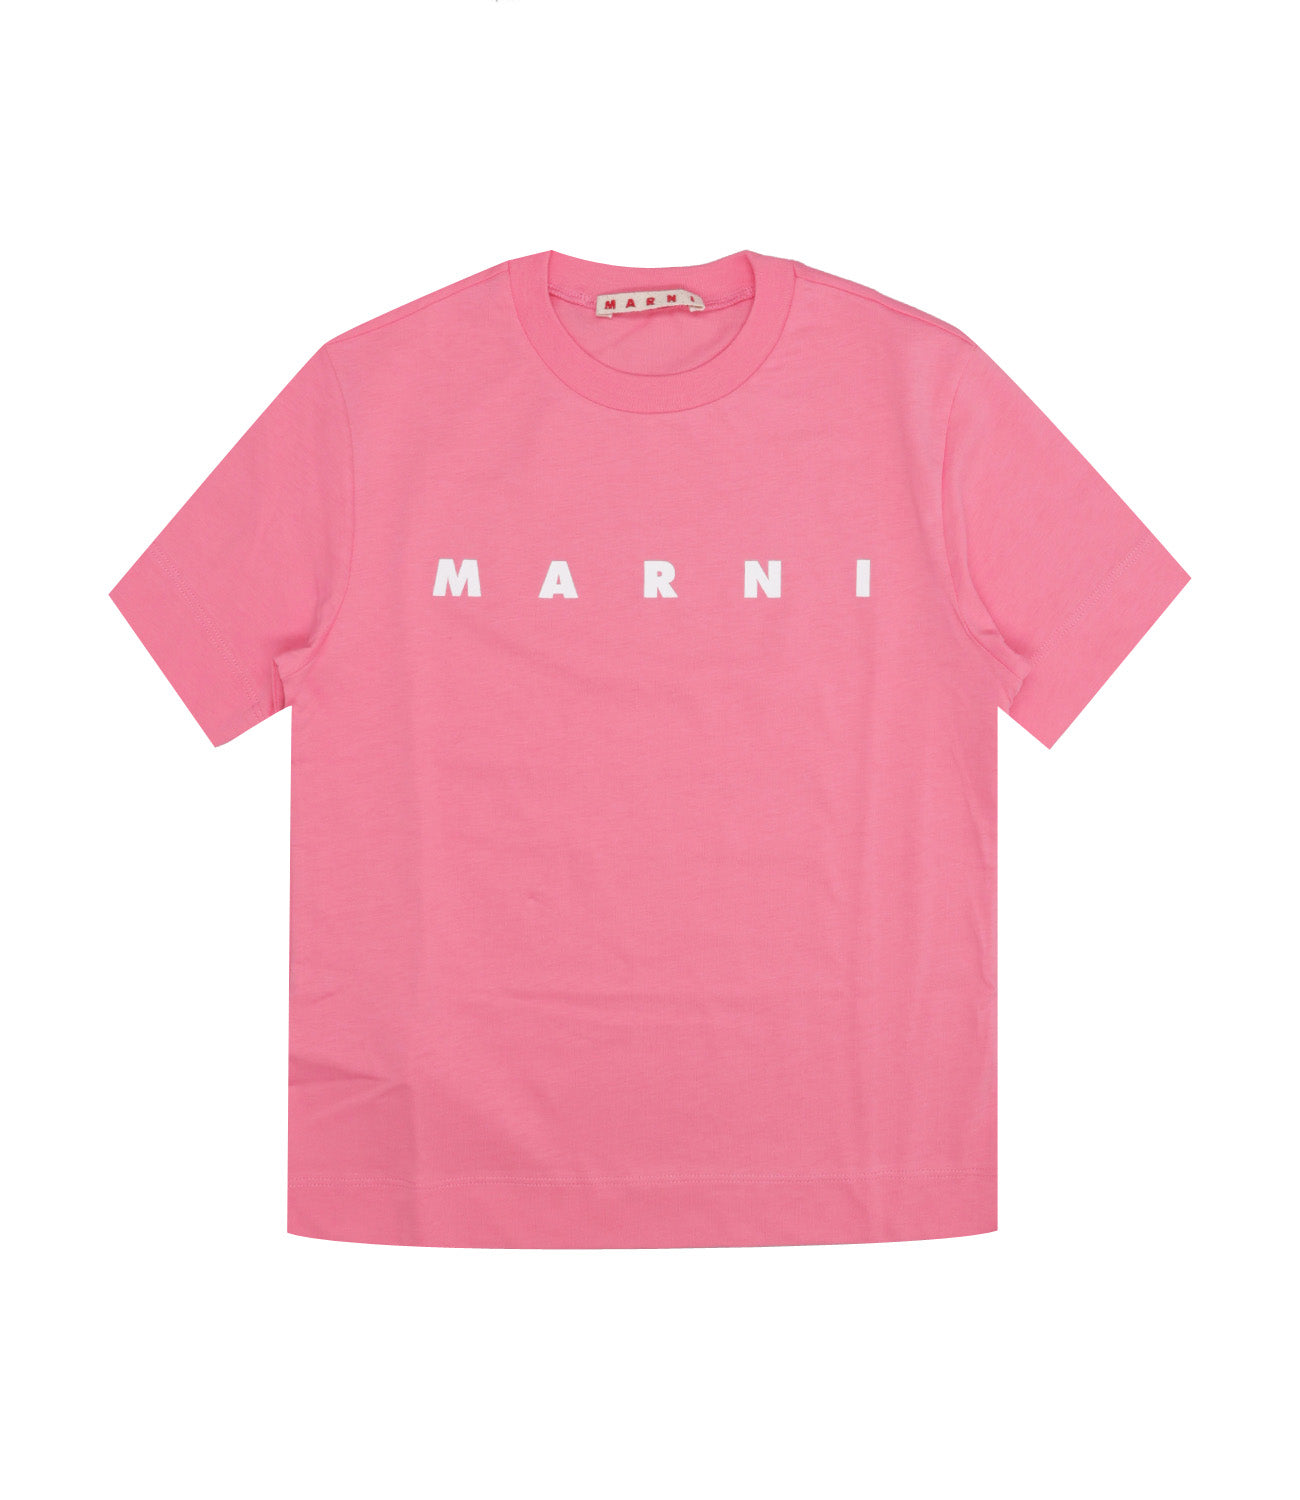 Marni Kids | T-Shirt Rosa Pesca